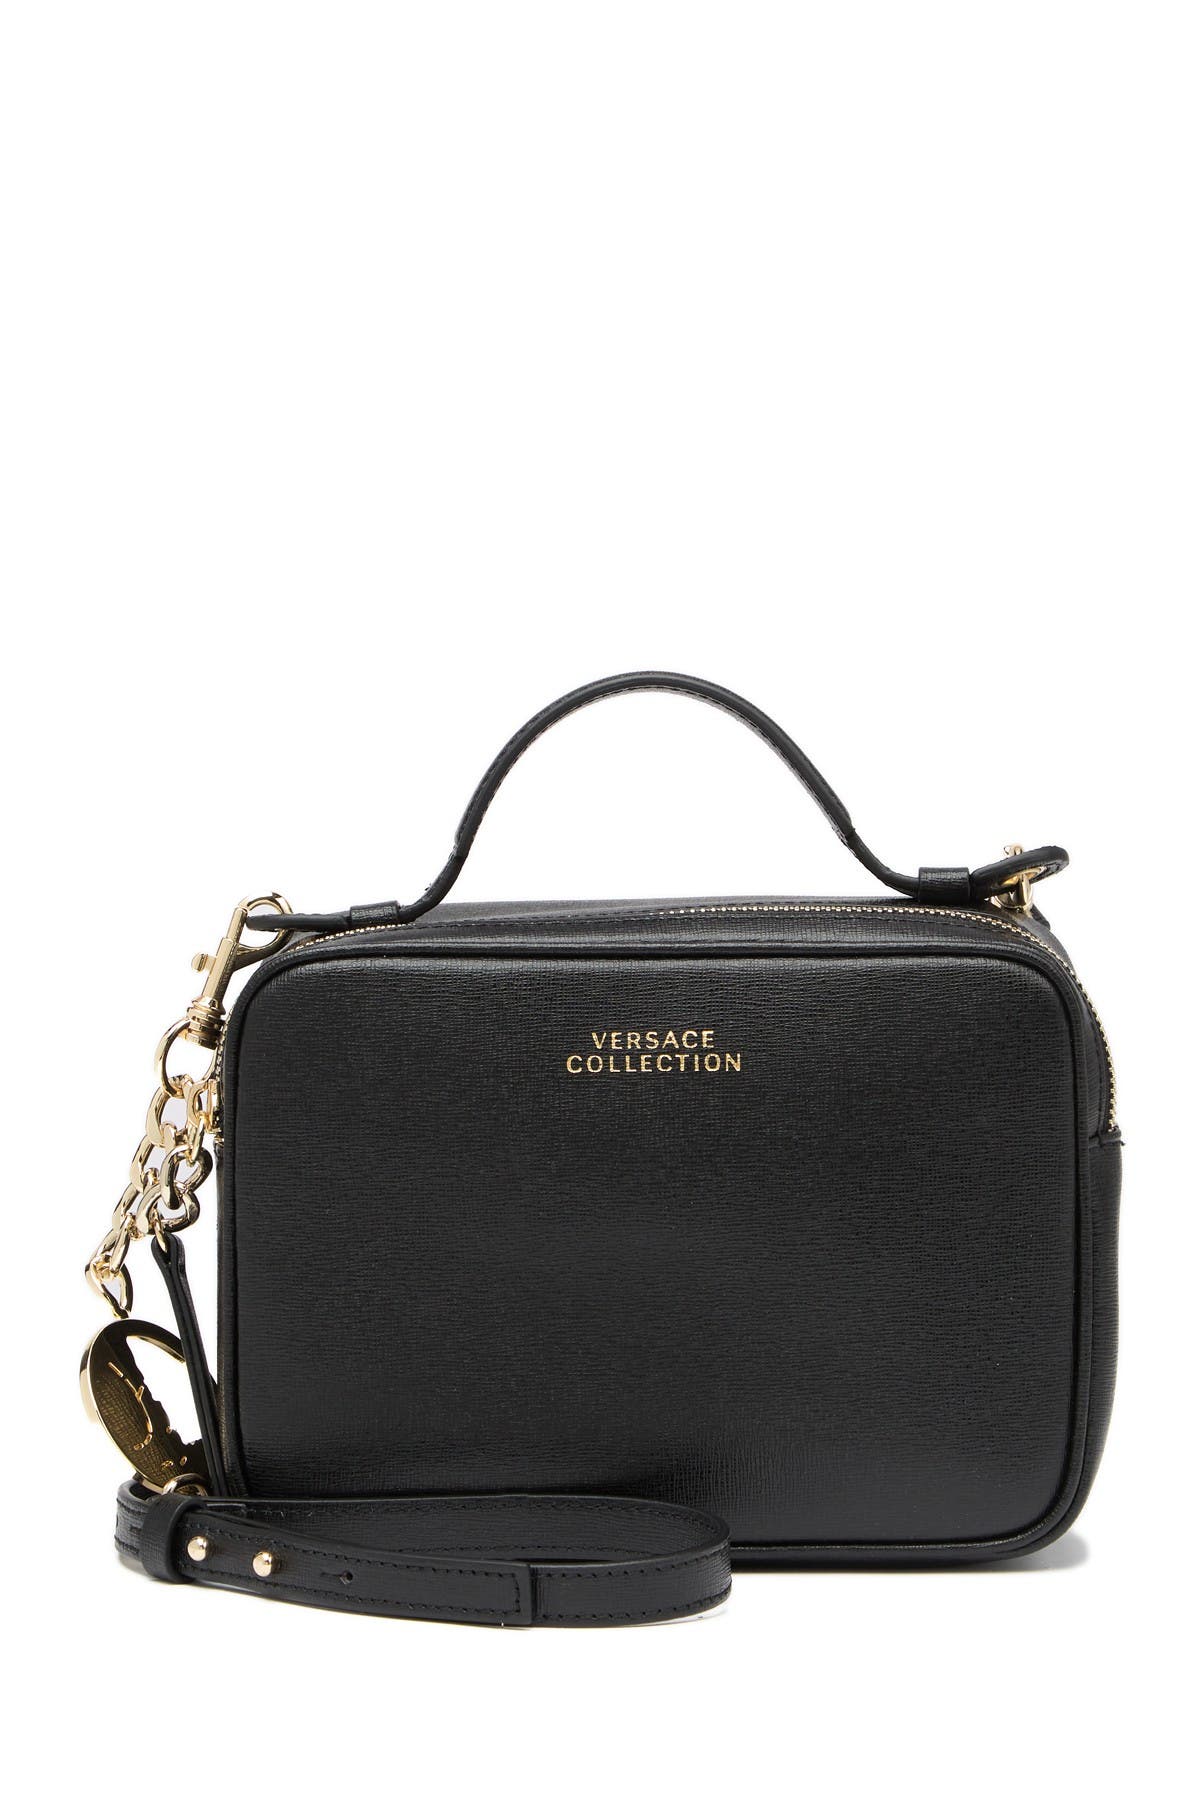 versace collection black purse